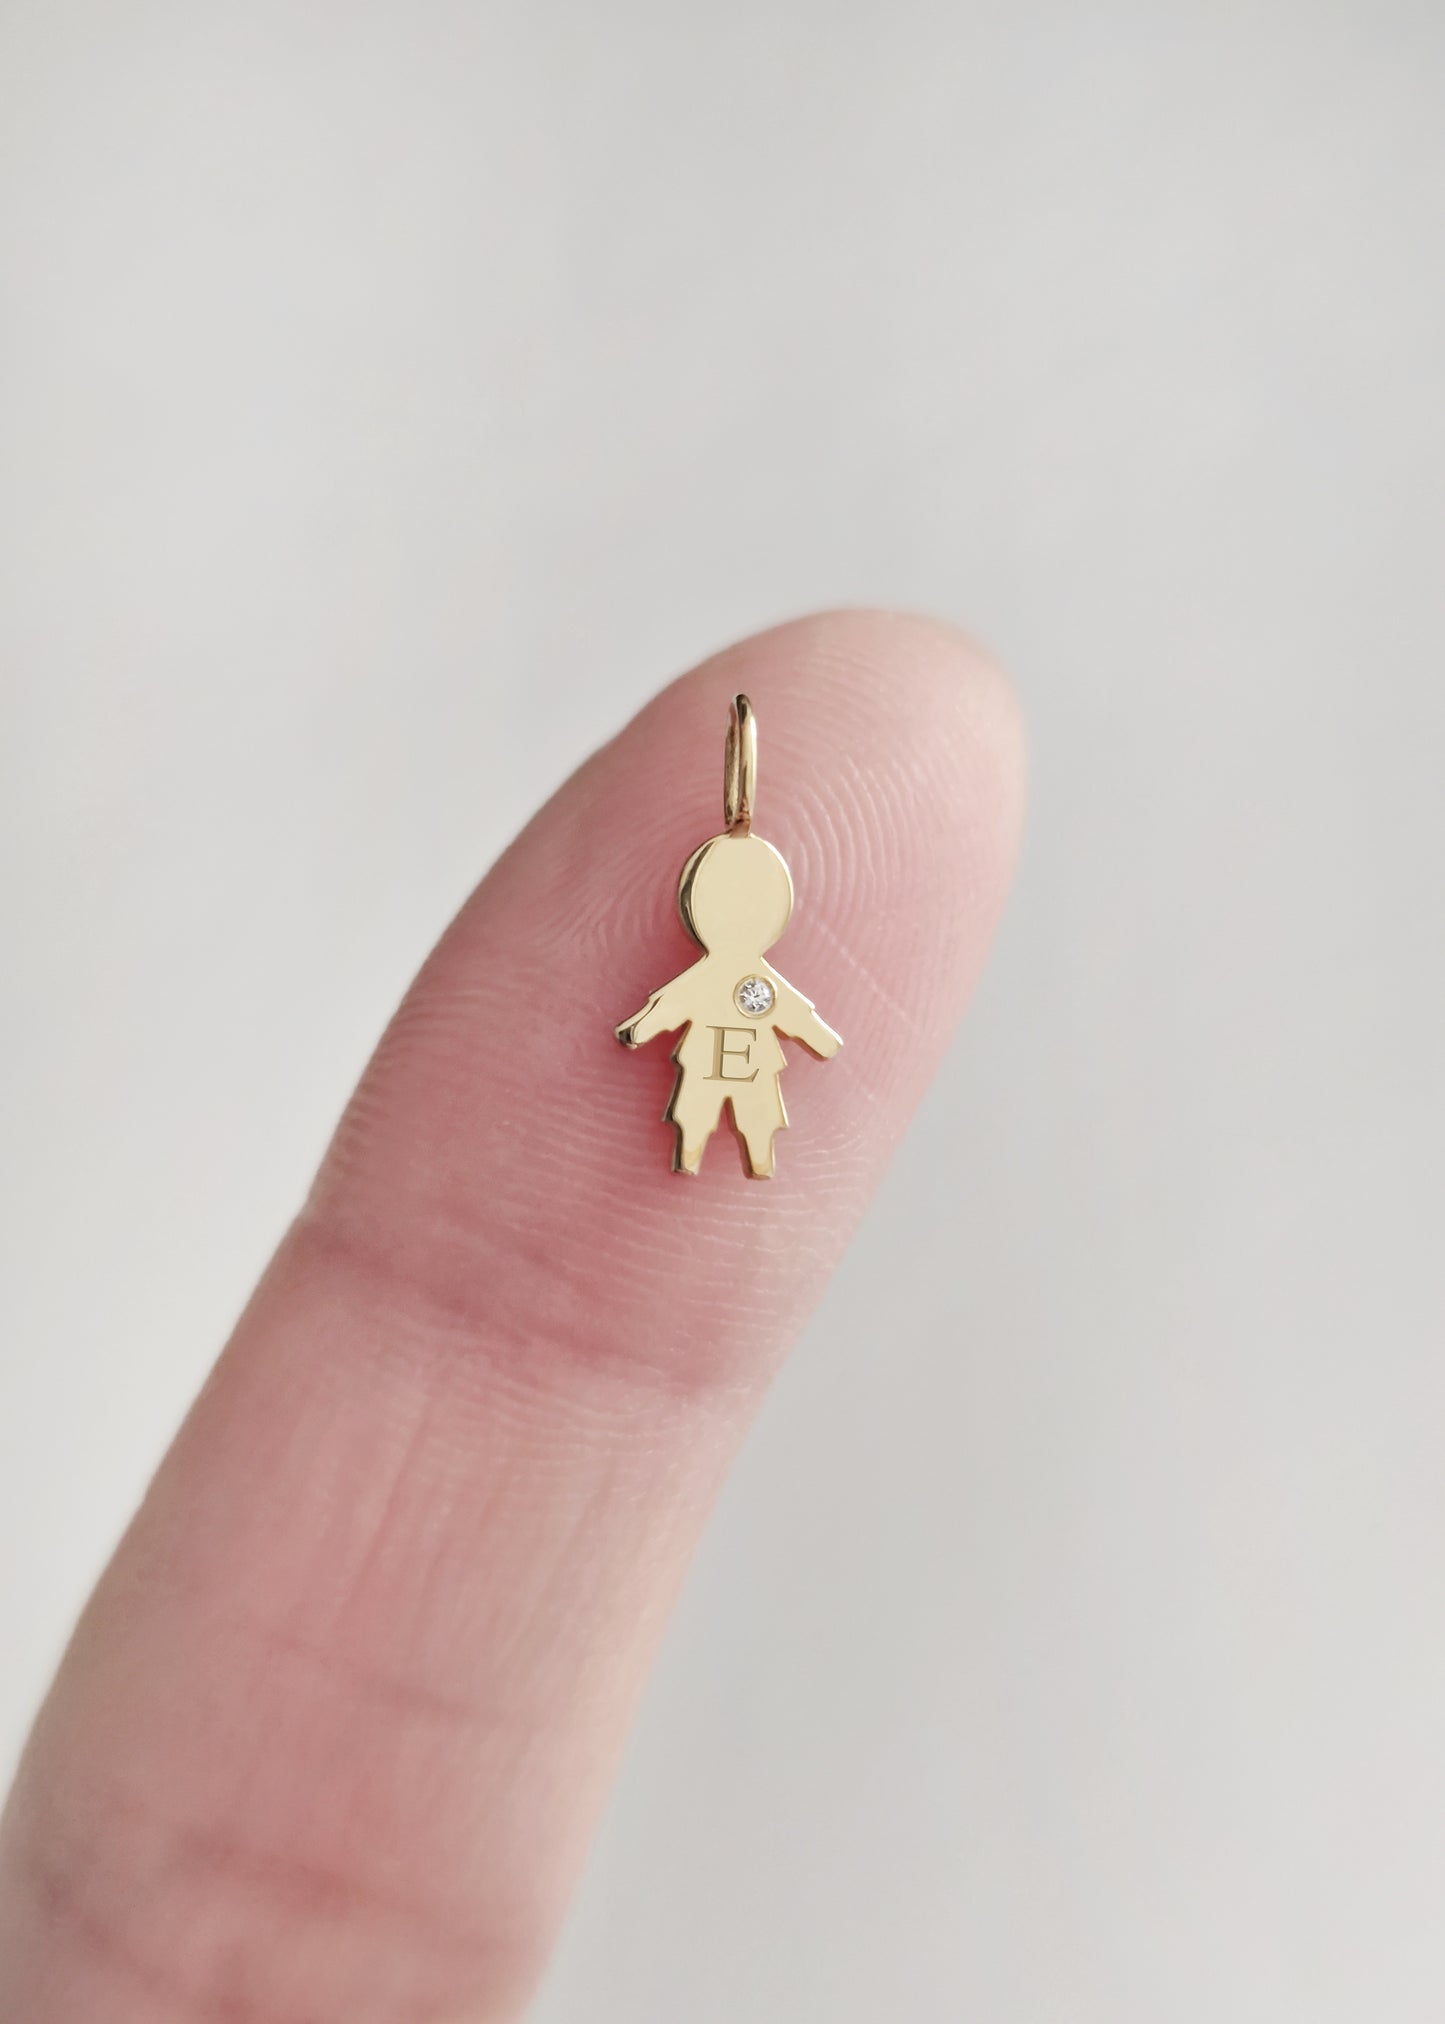 14K 9K Solid Gold Personalized Tiny Boy Kid Diamond Pendant Charm Necklace